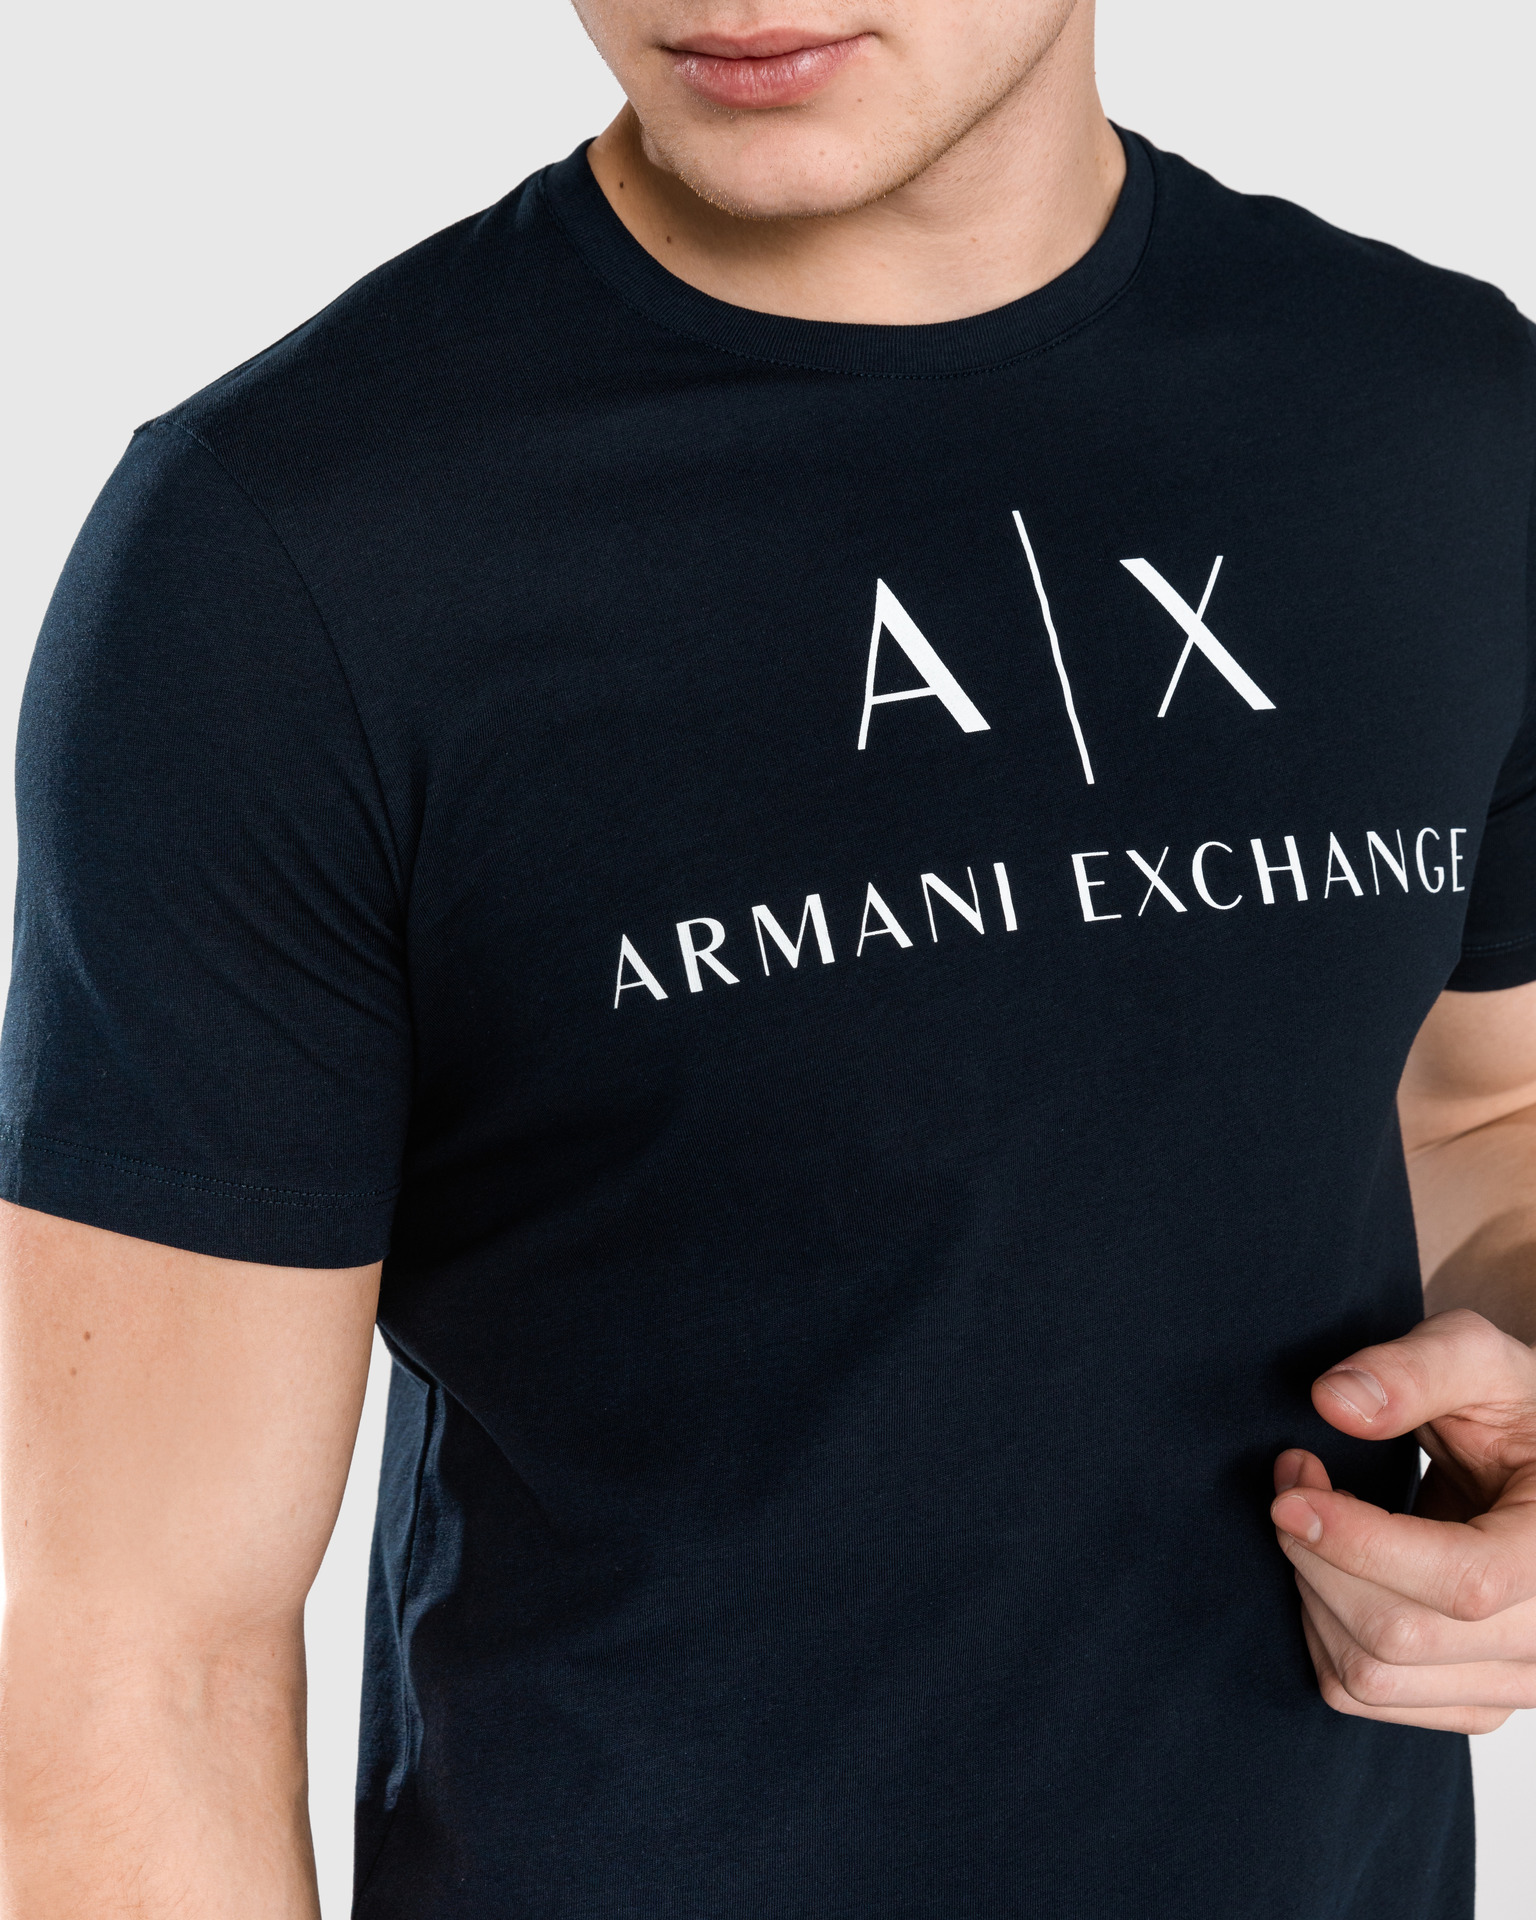 Армани эксчендж интернет магазин. Armani Exchange. Вещи Армани мужские. Armani Exchange 8nzj16. Армани на липучках мужские.